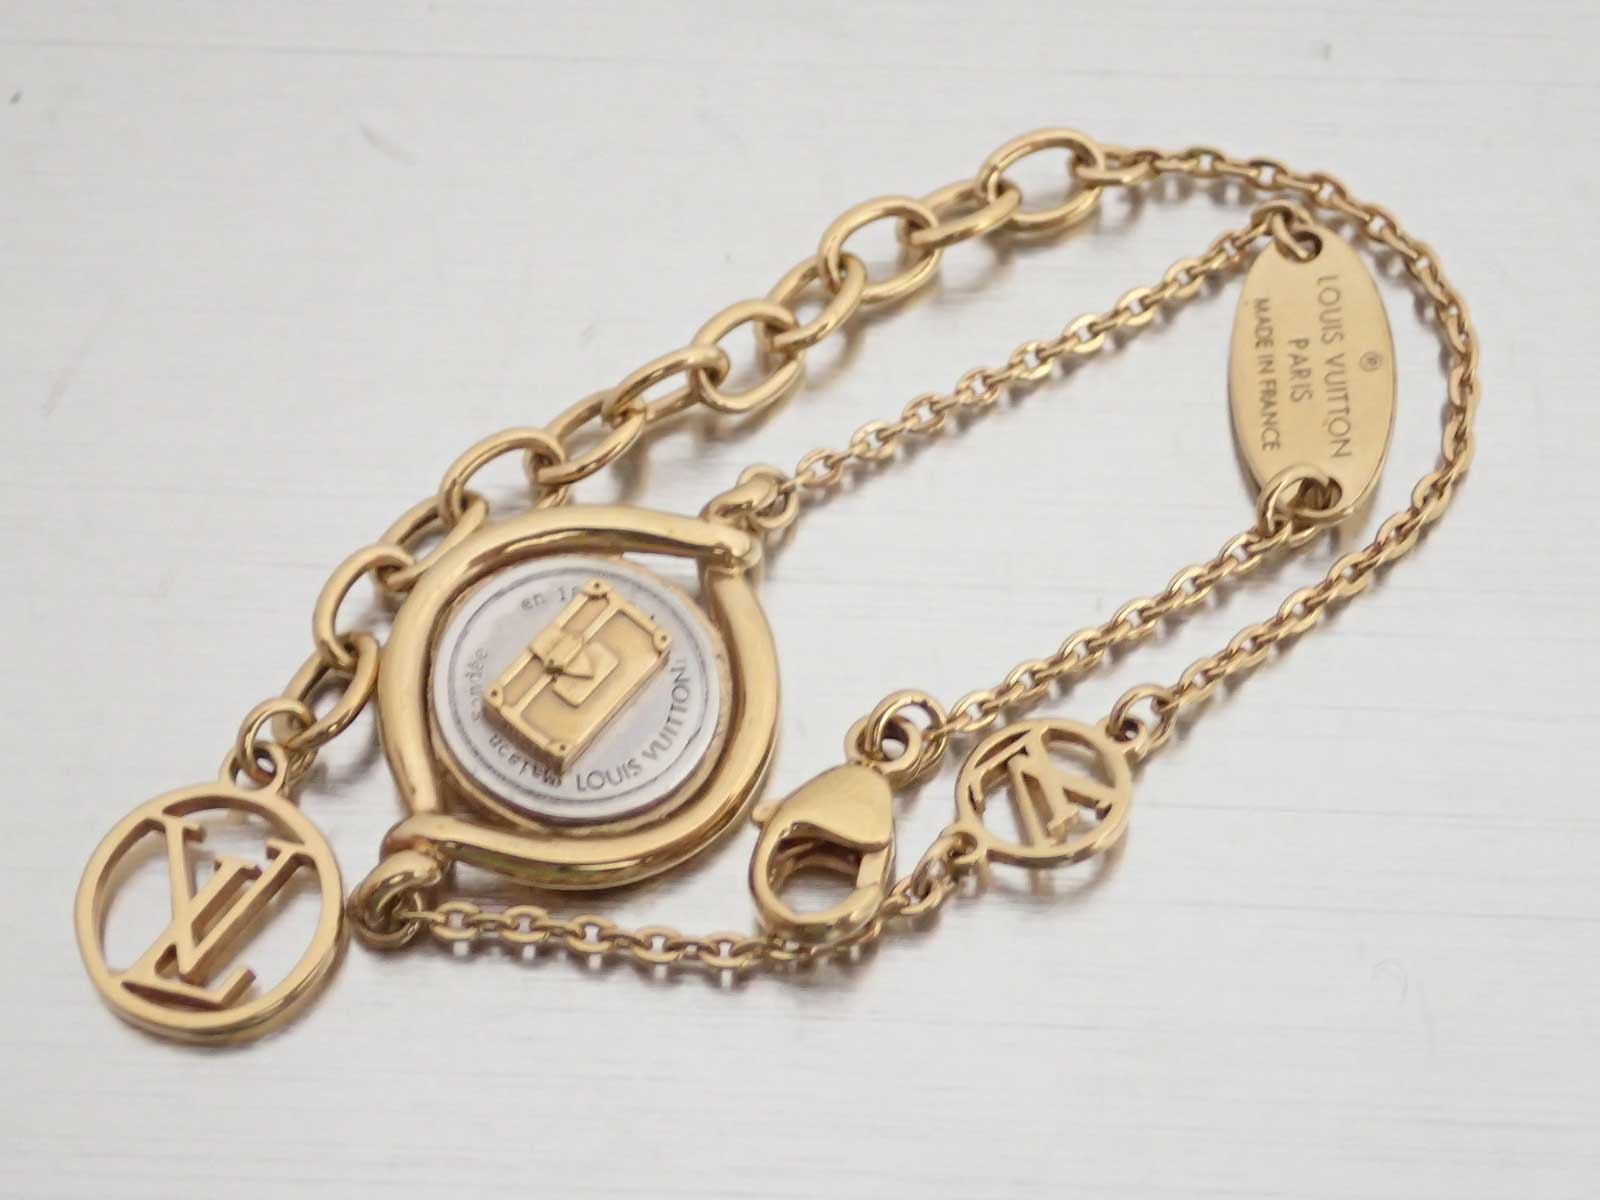 Auth Louis Vuitton Trunk Motif Bracelet Laidy Lucky Silver/Goldtone - e42339 | eBay